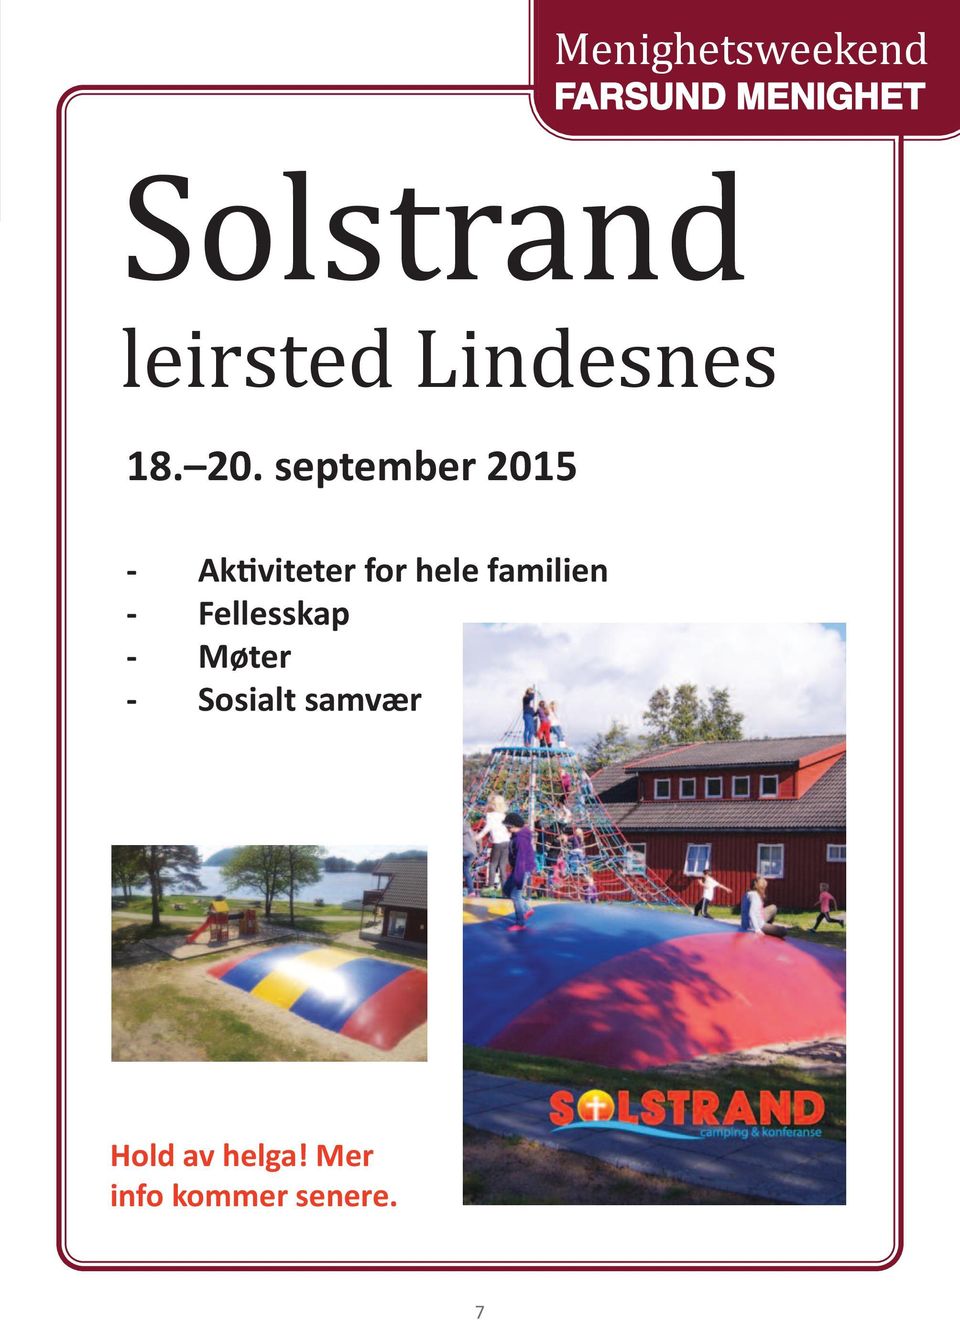 Solstrand leirsted Lindesnes - Aktiviteter for